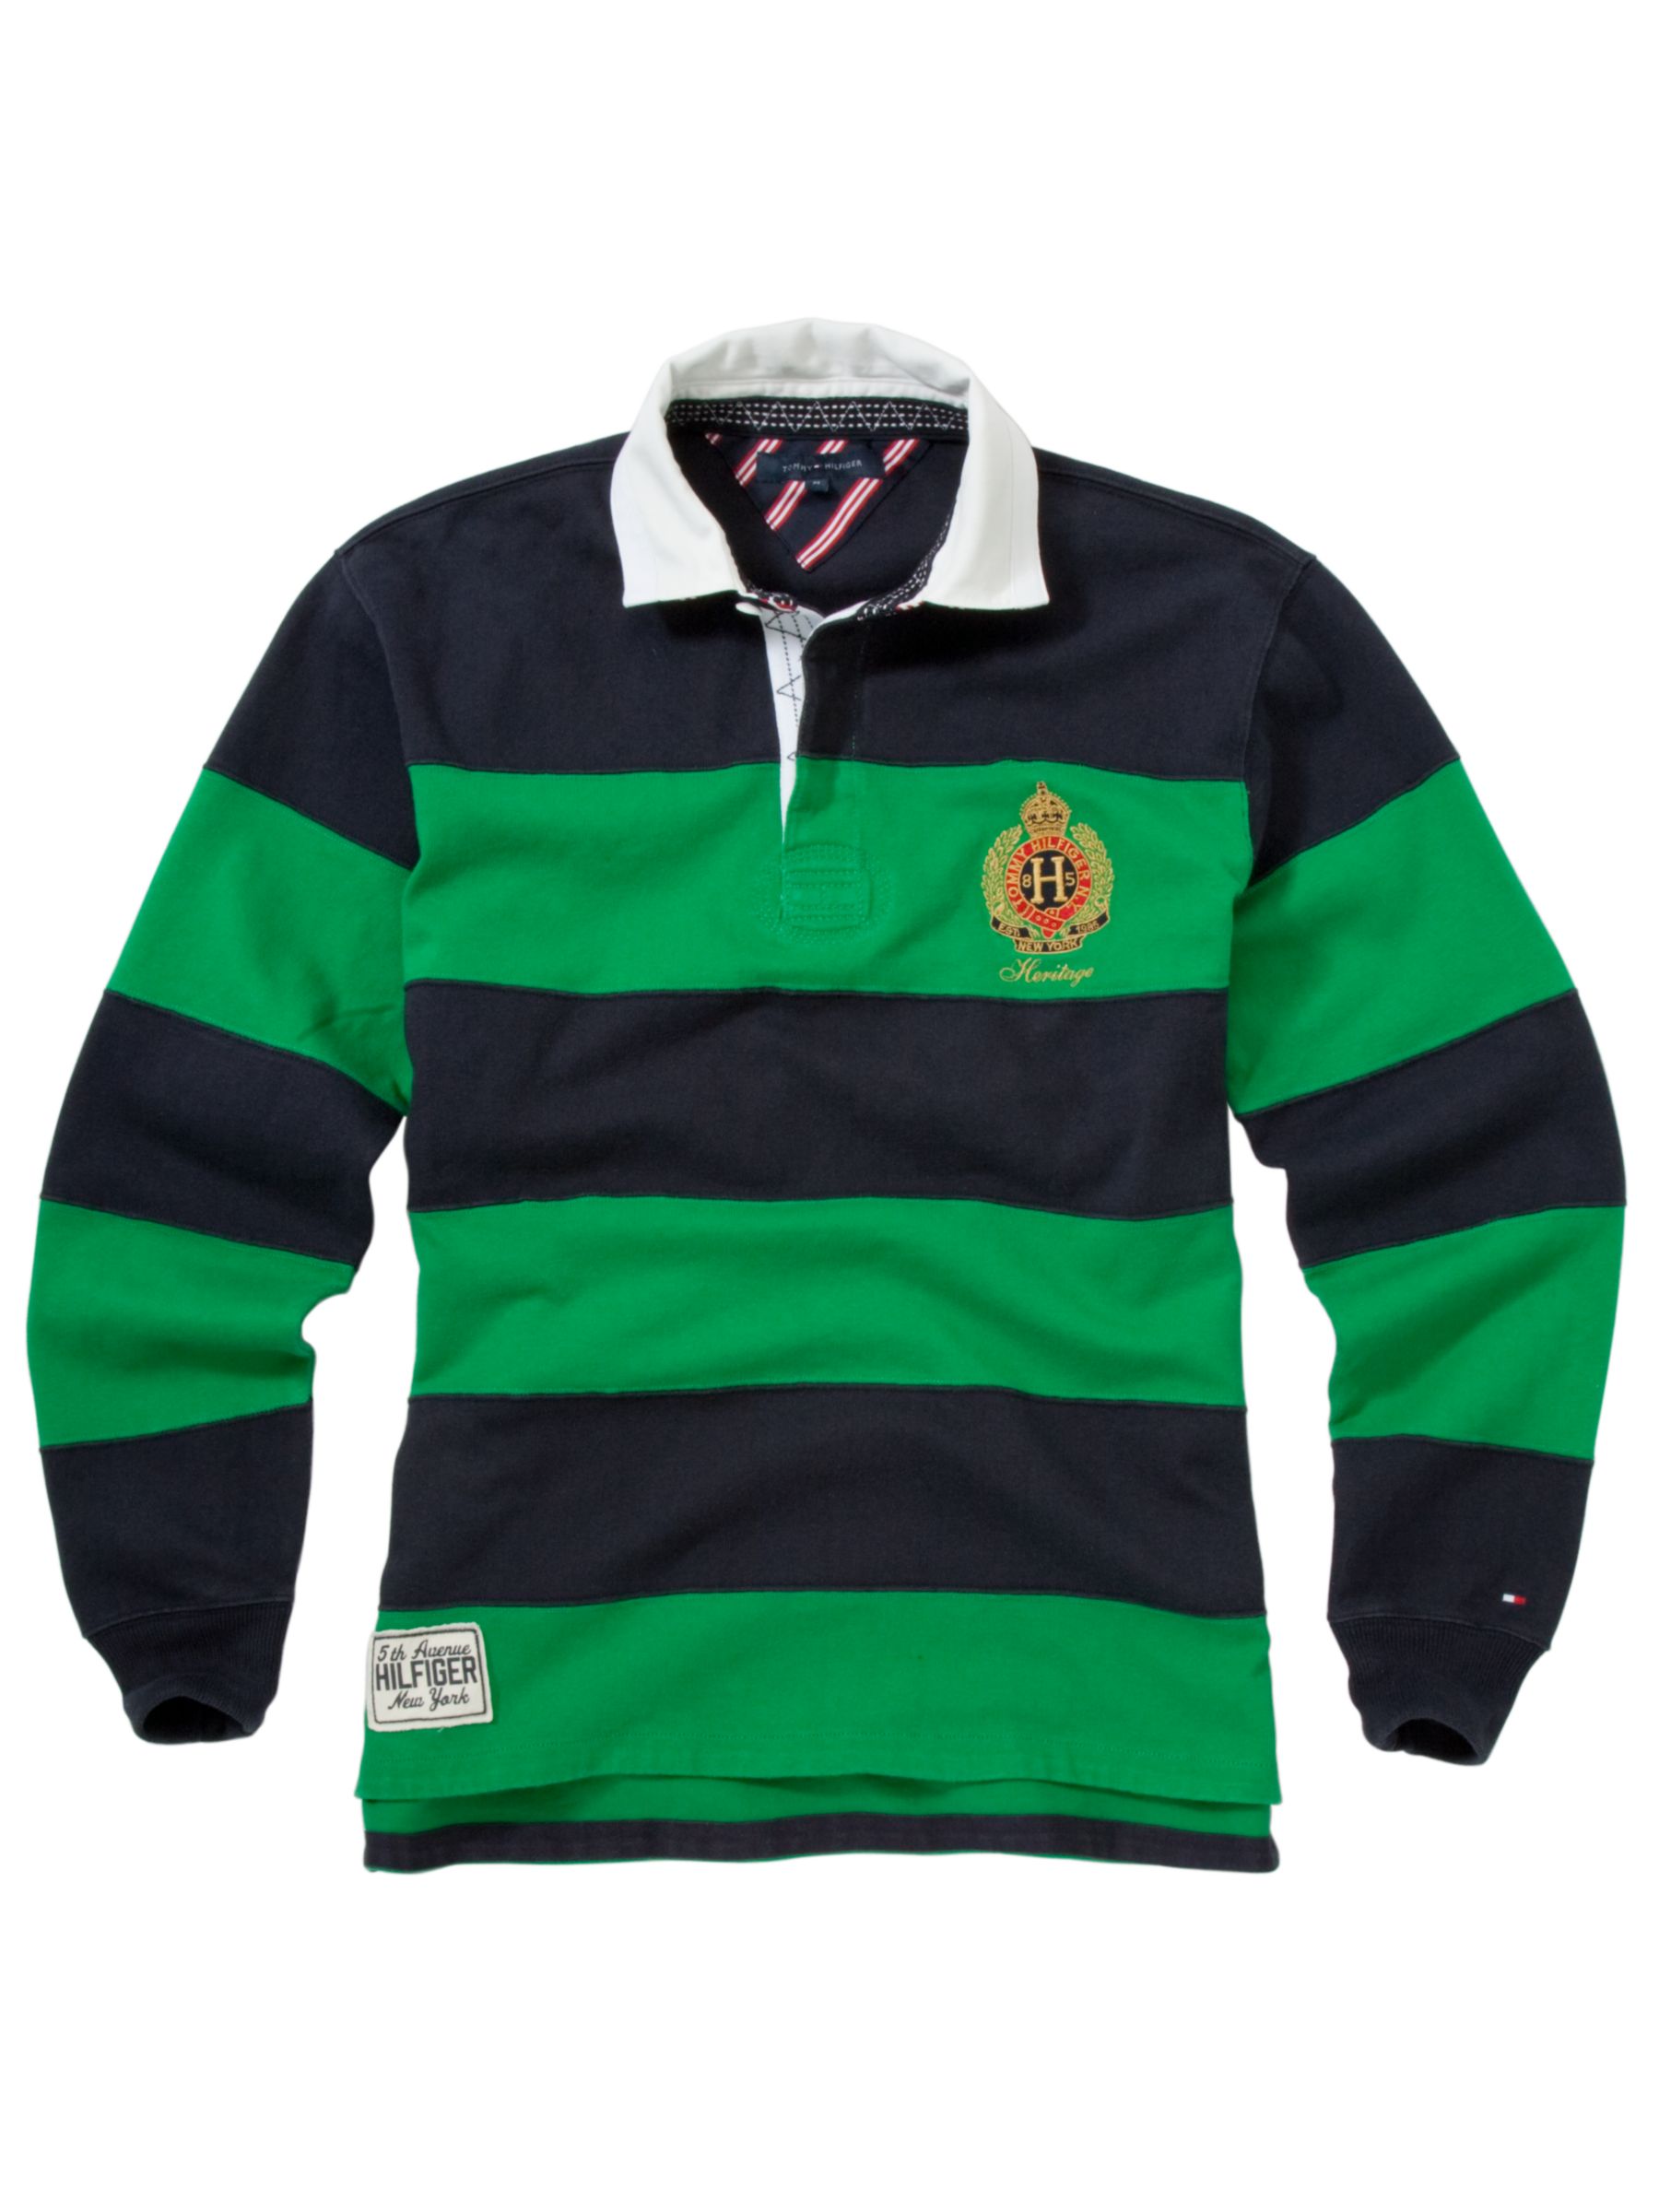 Piero Rugby Shirt, Green/Black